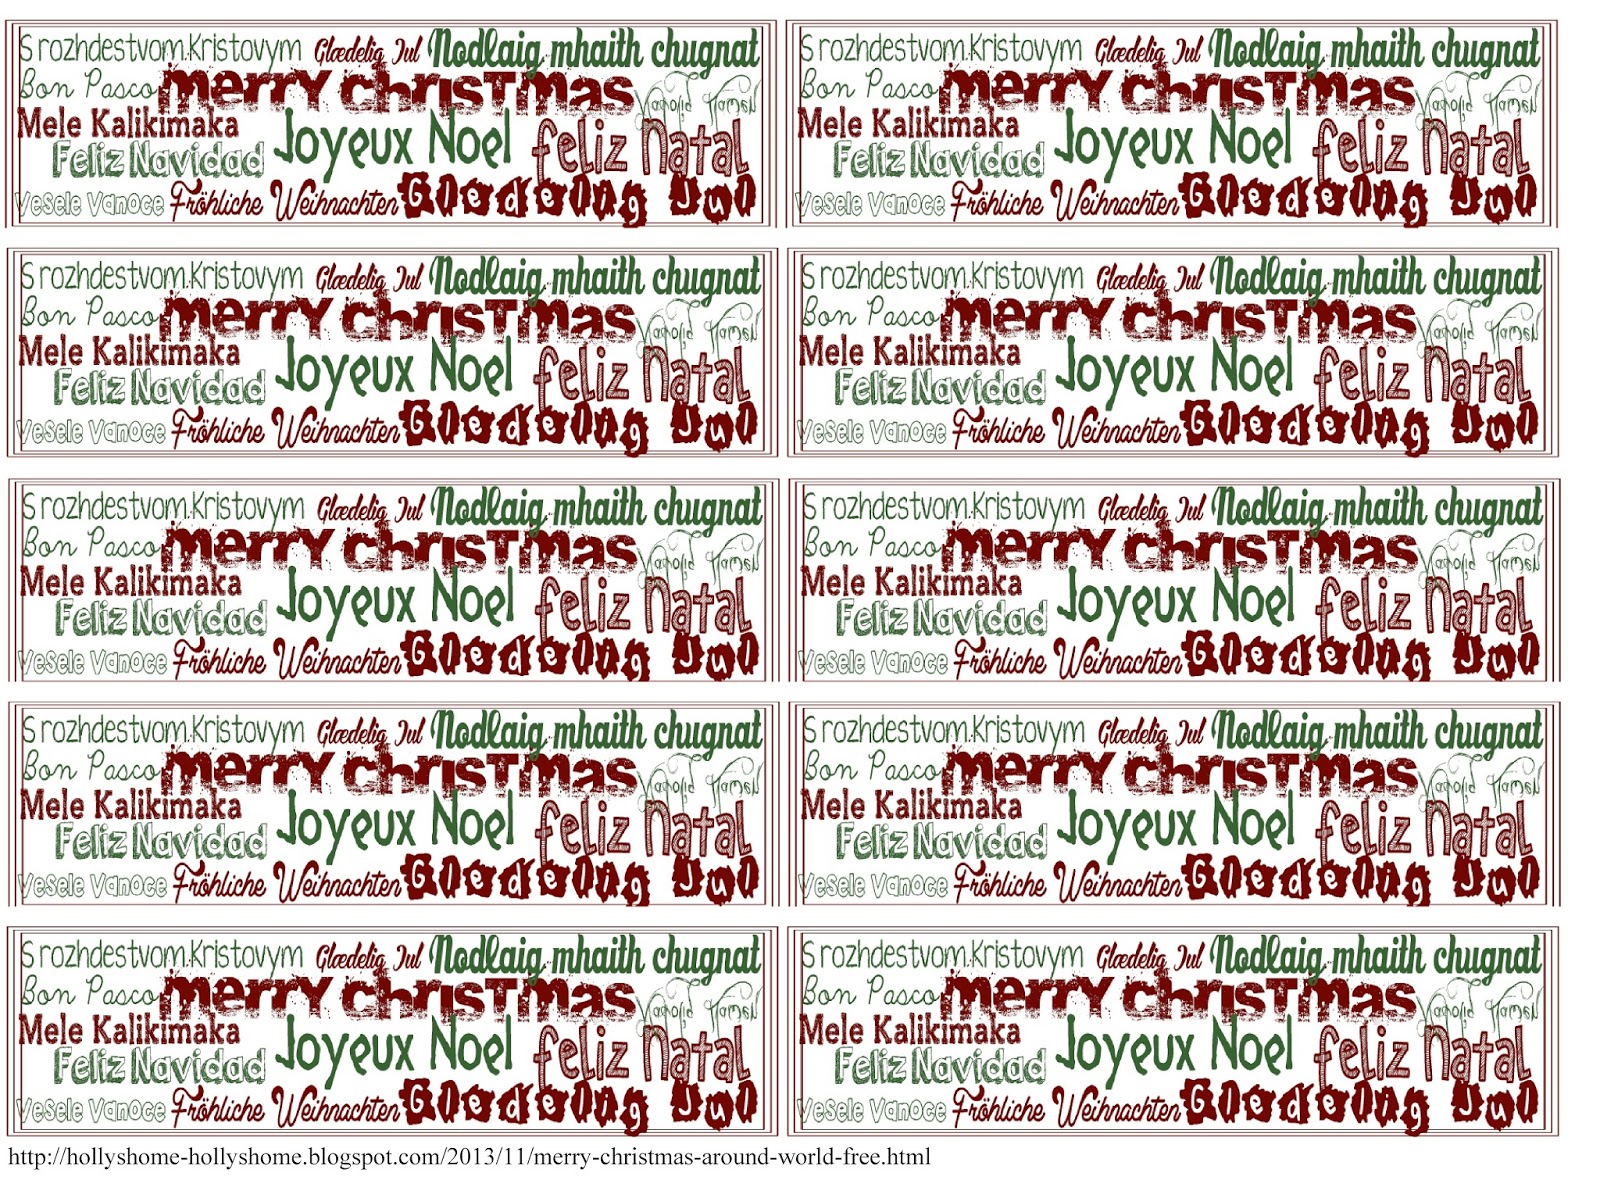 HollysHome Family Life: Merry Christmas Around the World FREE Printout ...